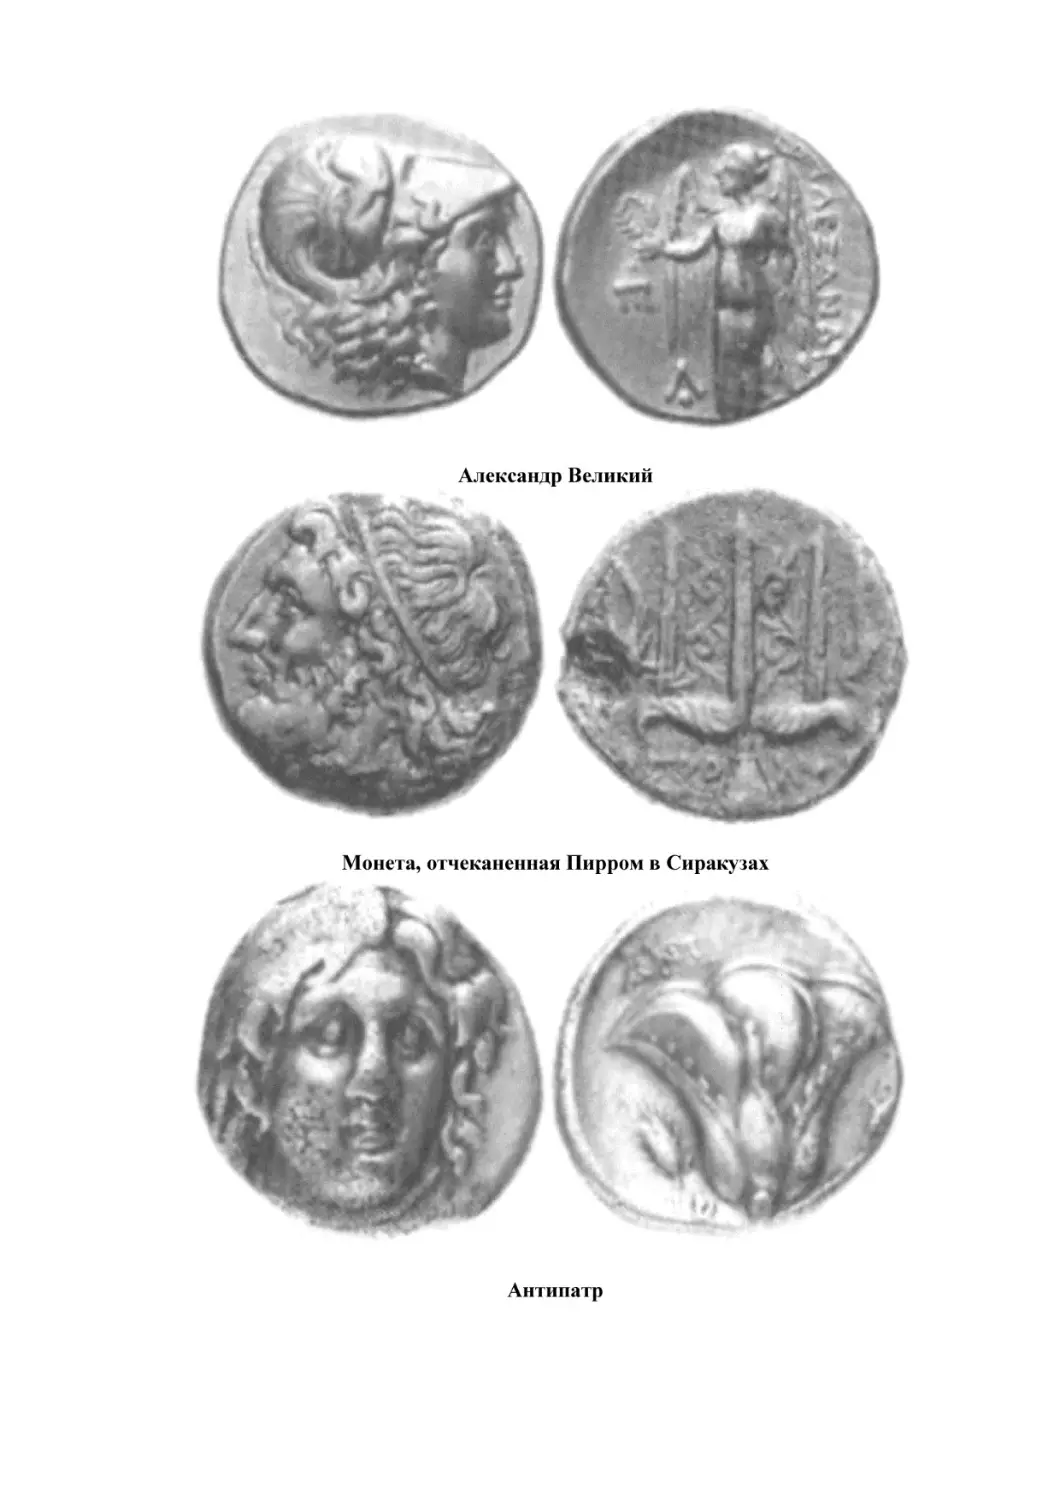 Александр Великий
Монета, отчеканенная Пирром в Сиракузах
Антипатр